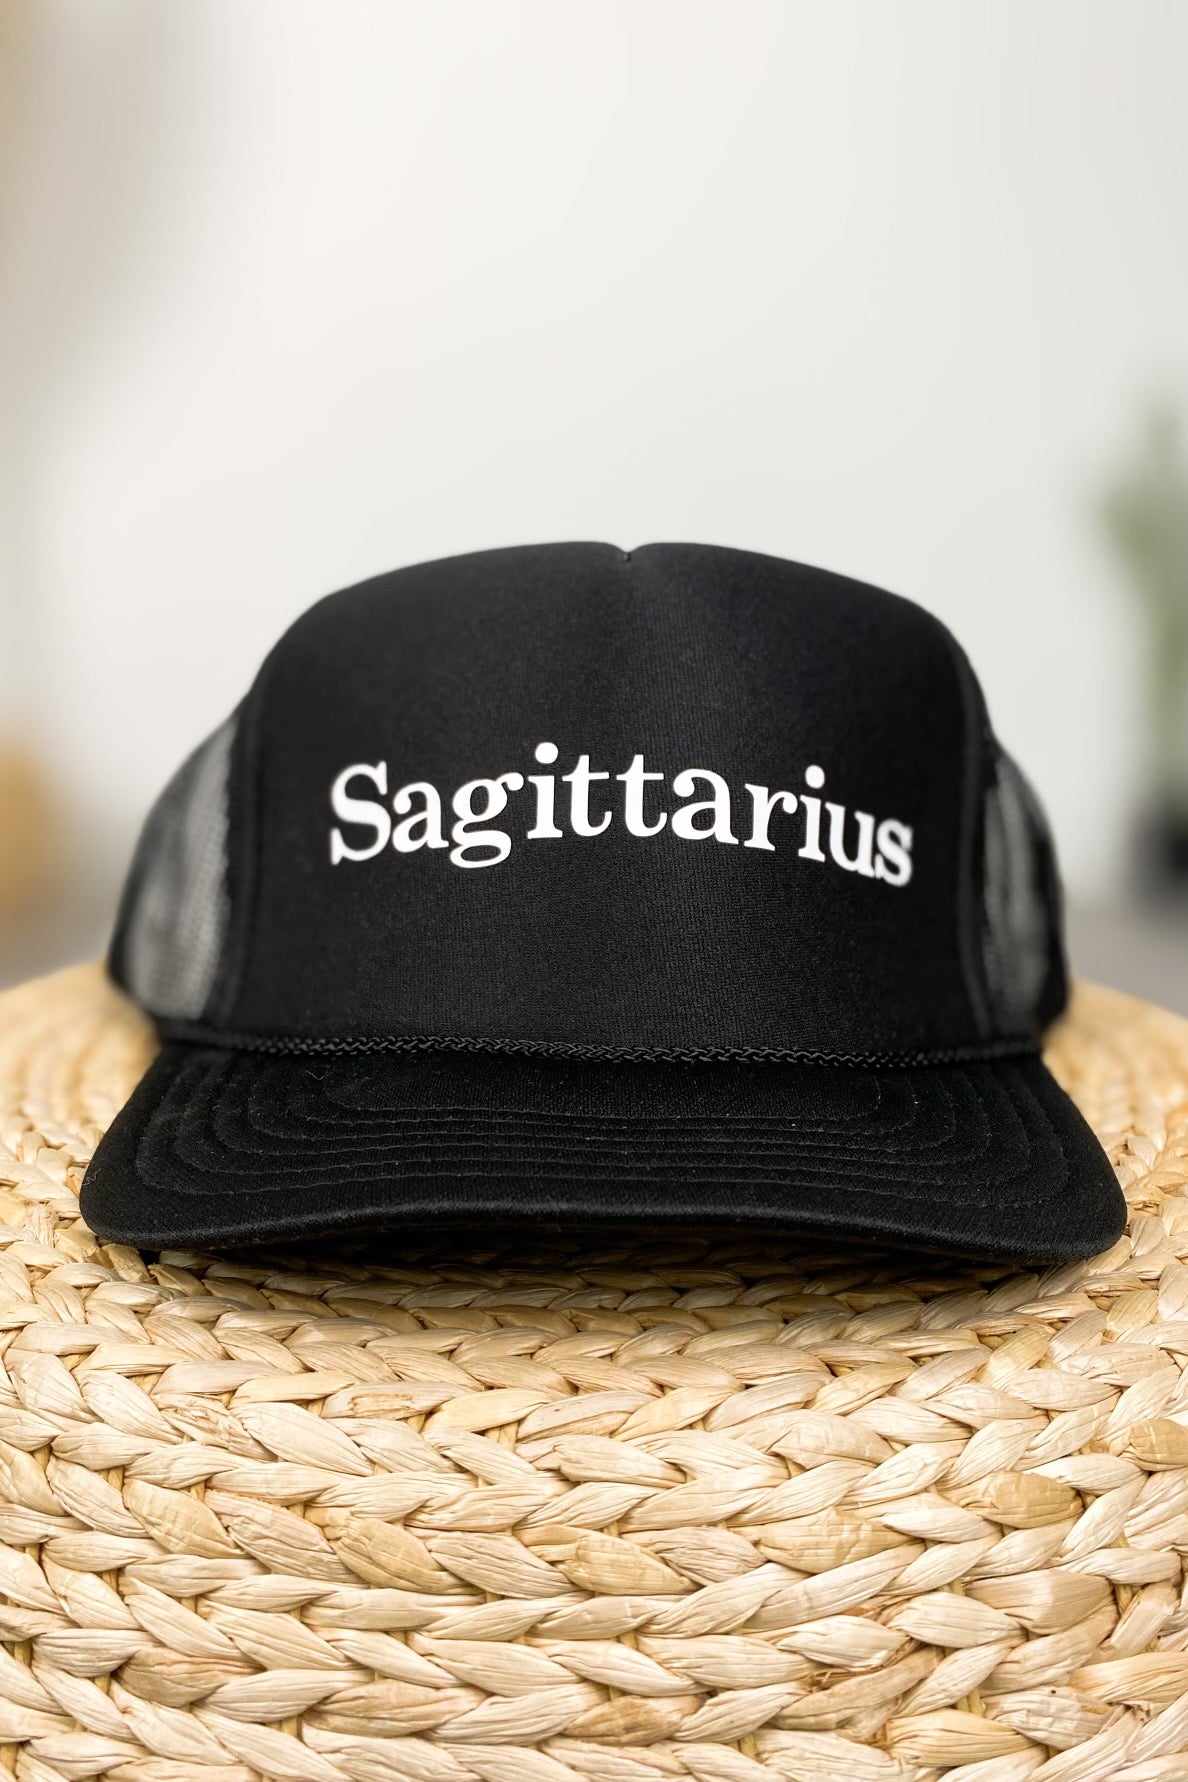 Sagittarius trucker hat black - Trendy Hats at Lush Fashion Lounge Boutique in Oklahoma City